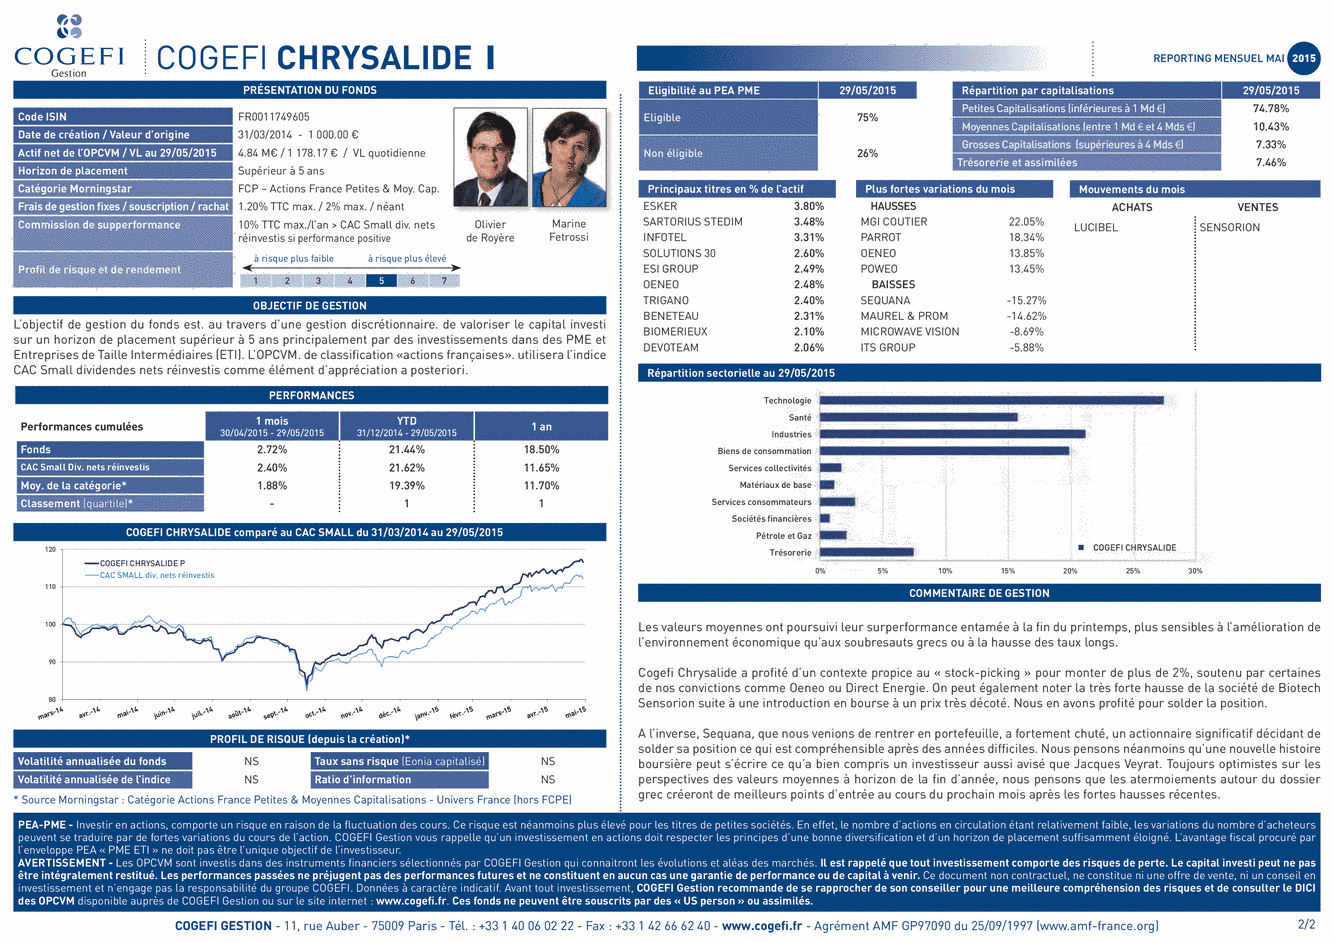 Fiche Produit Cogefi Chrysalide I - 31/05/2015 - French